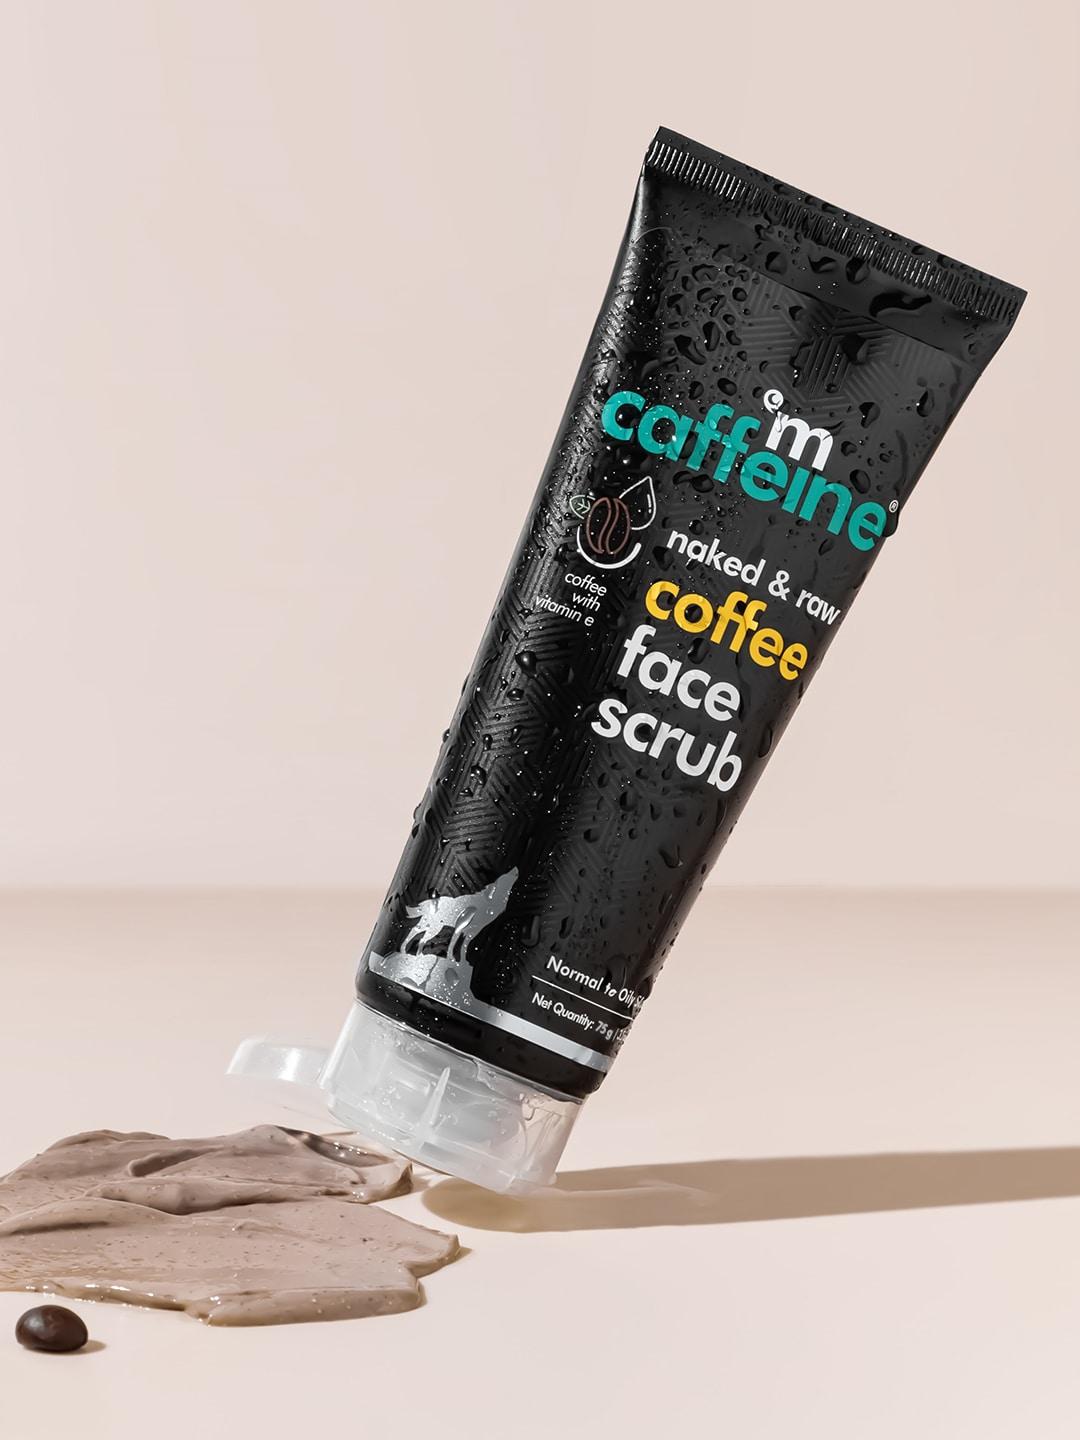 mcaffeine-coffee-exfoliating-face-scrub-for-fresh-&-glowing-skin-removes-tan-&-blackheads